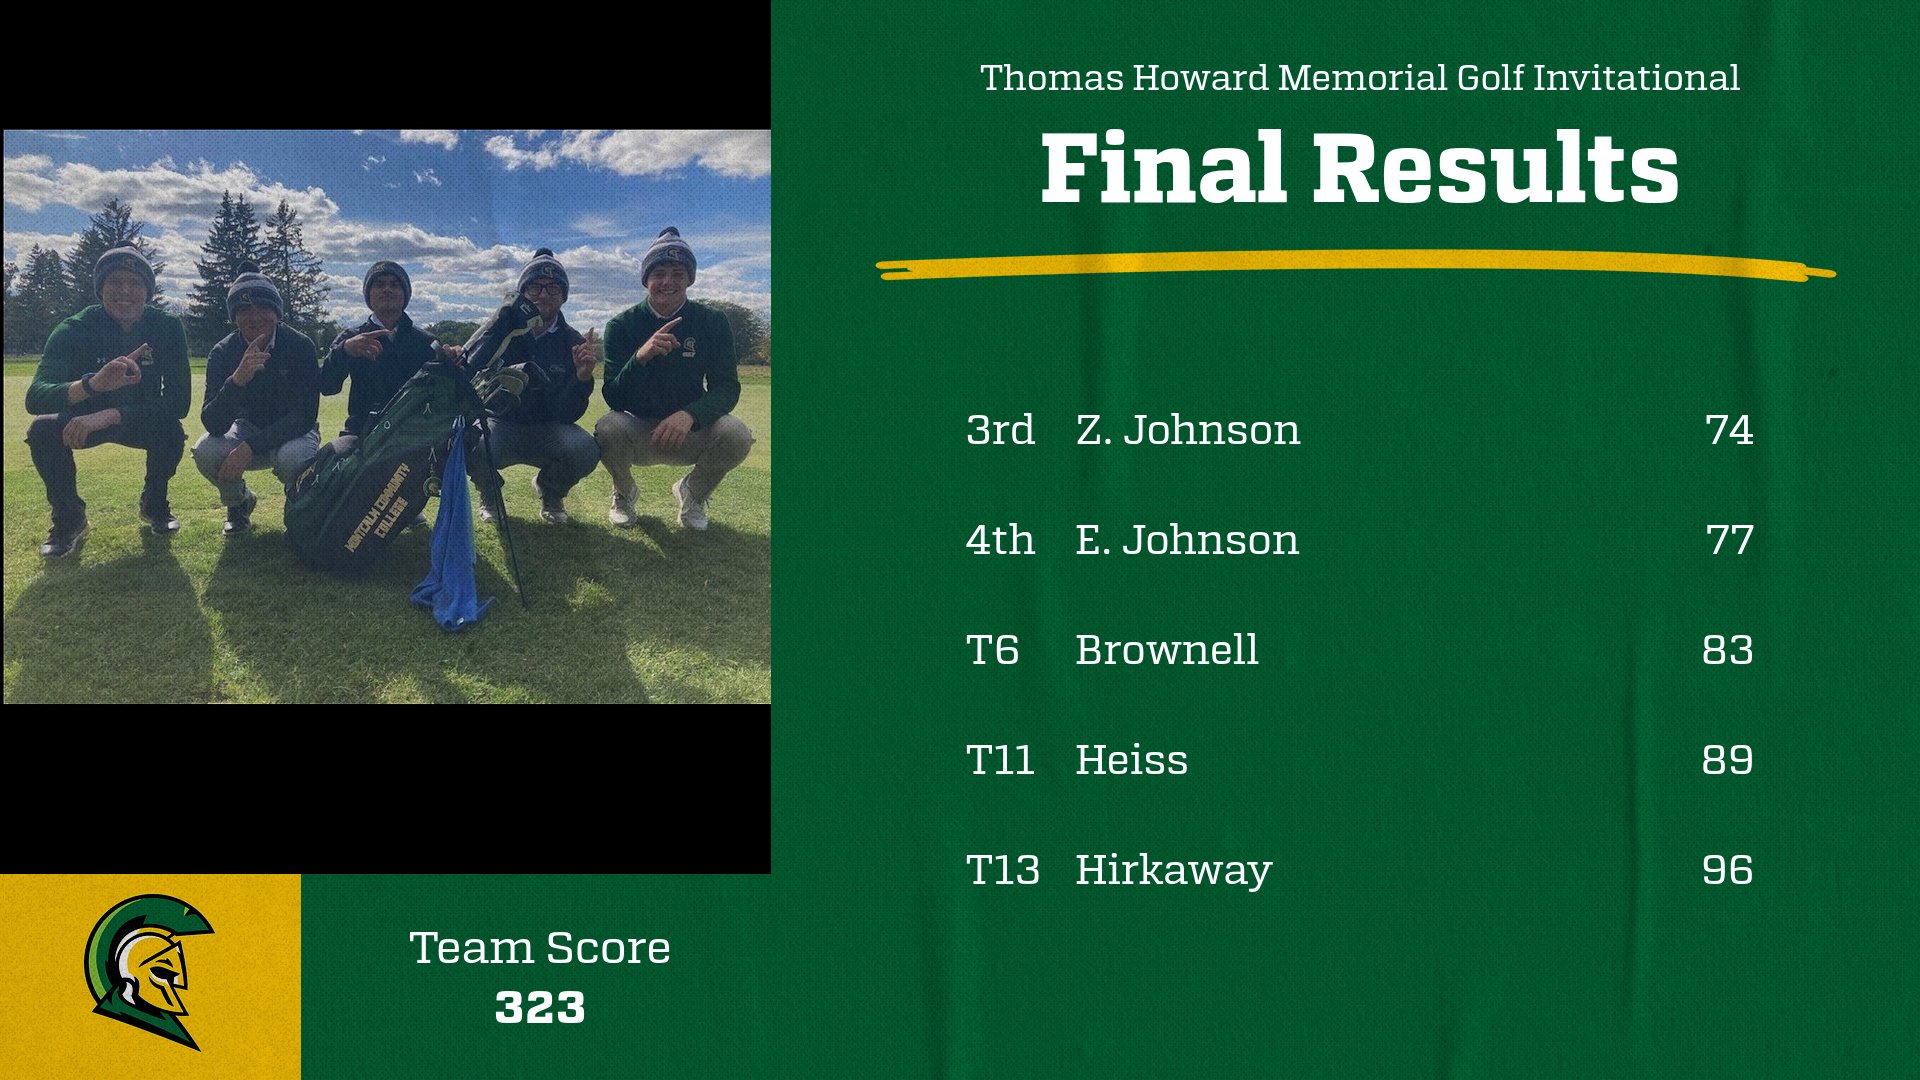 Golf Team Finishes 1st at Thomas Howard Memorial Golf Invitational